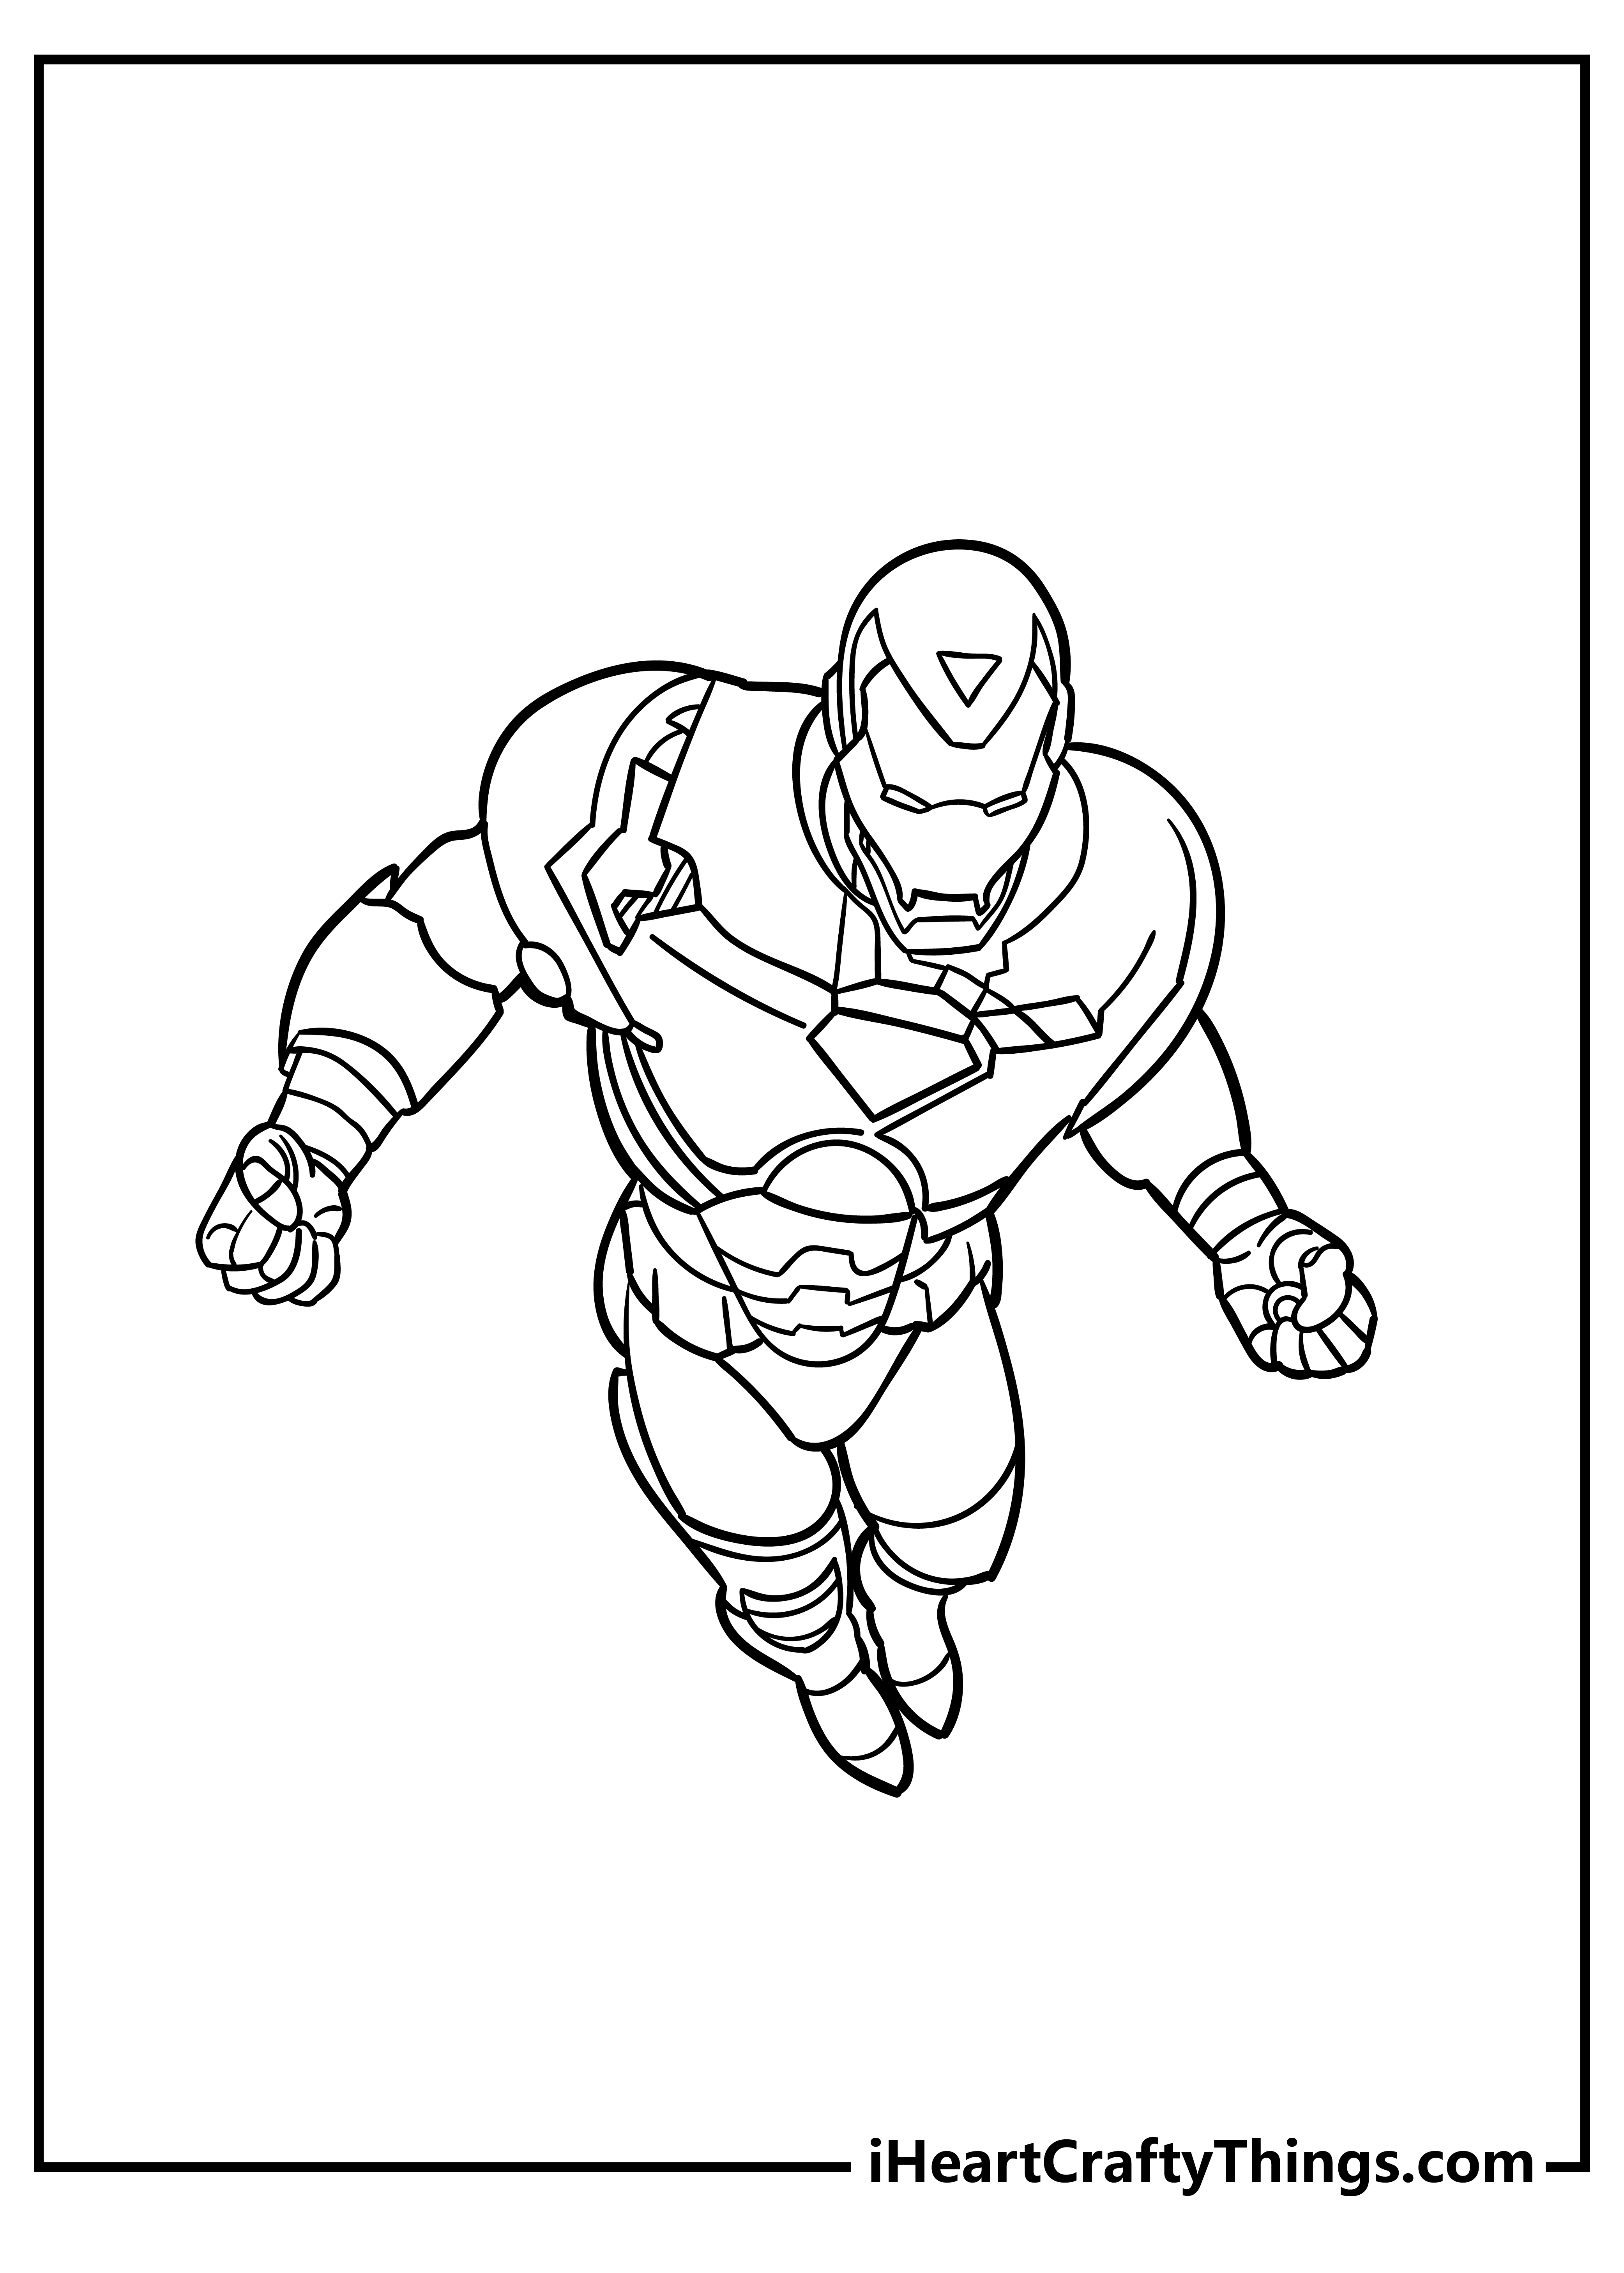 Iron Man Coloring Pages free pdf download